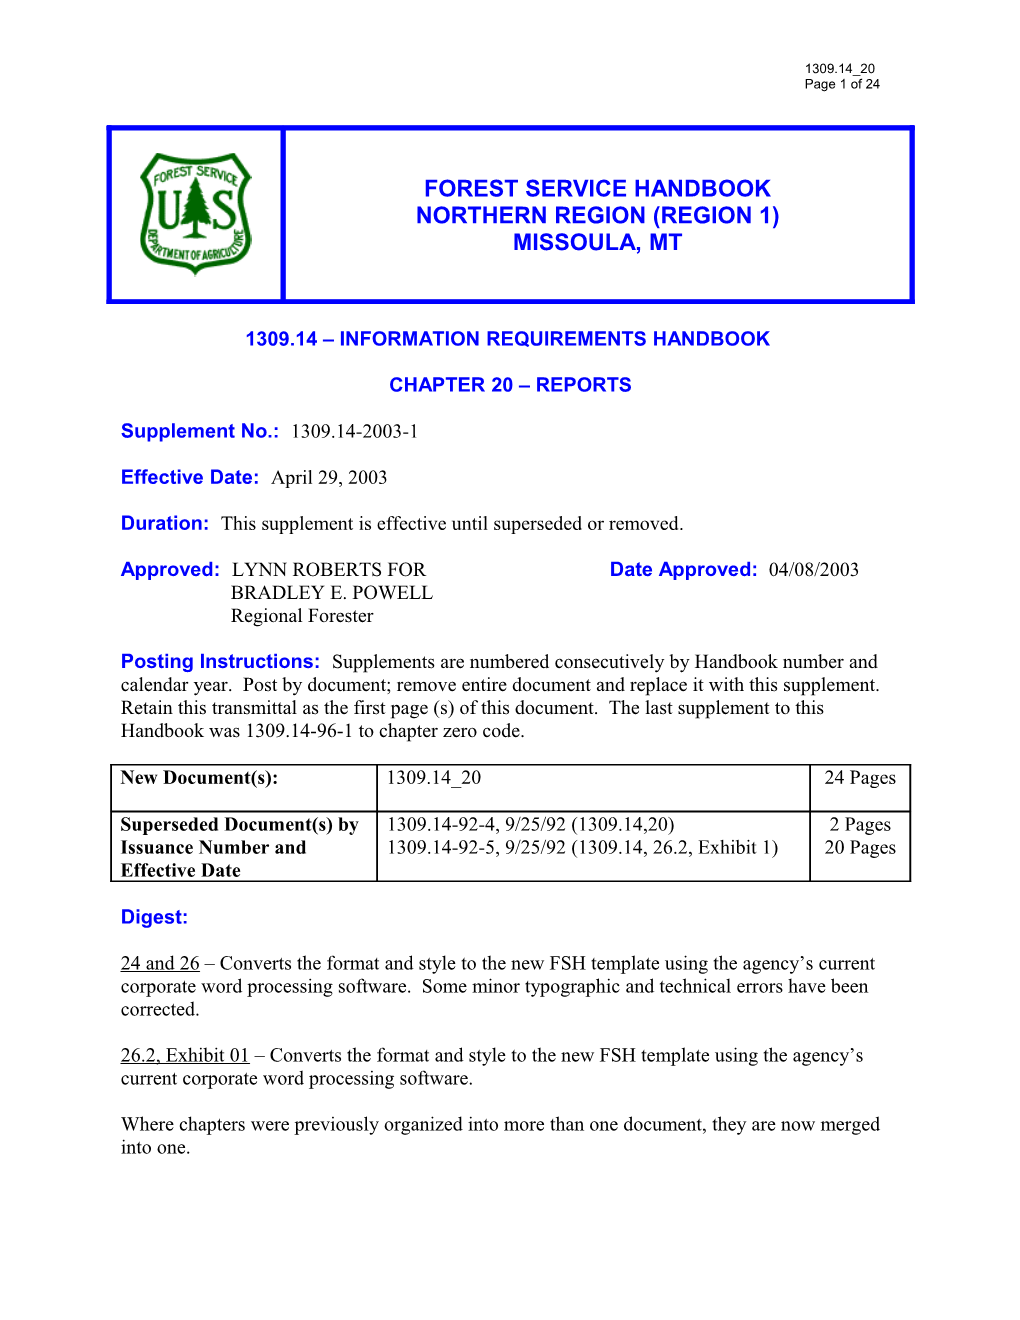 1309.14 Information Requirements Handbook